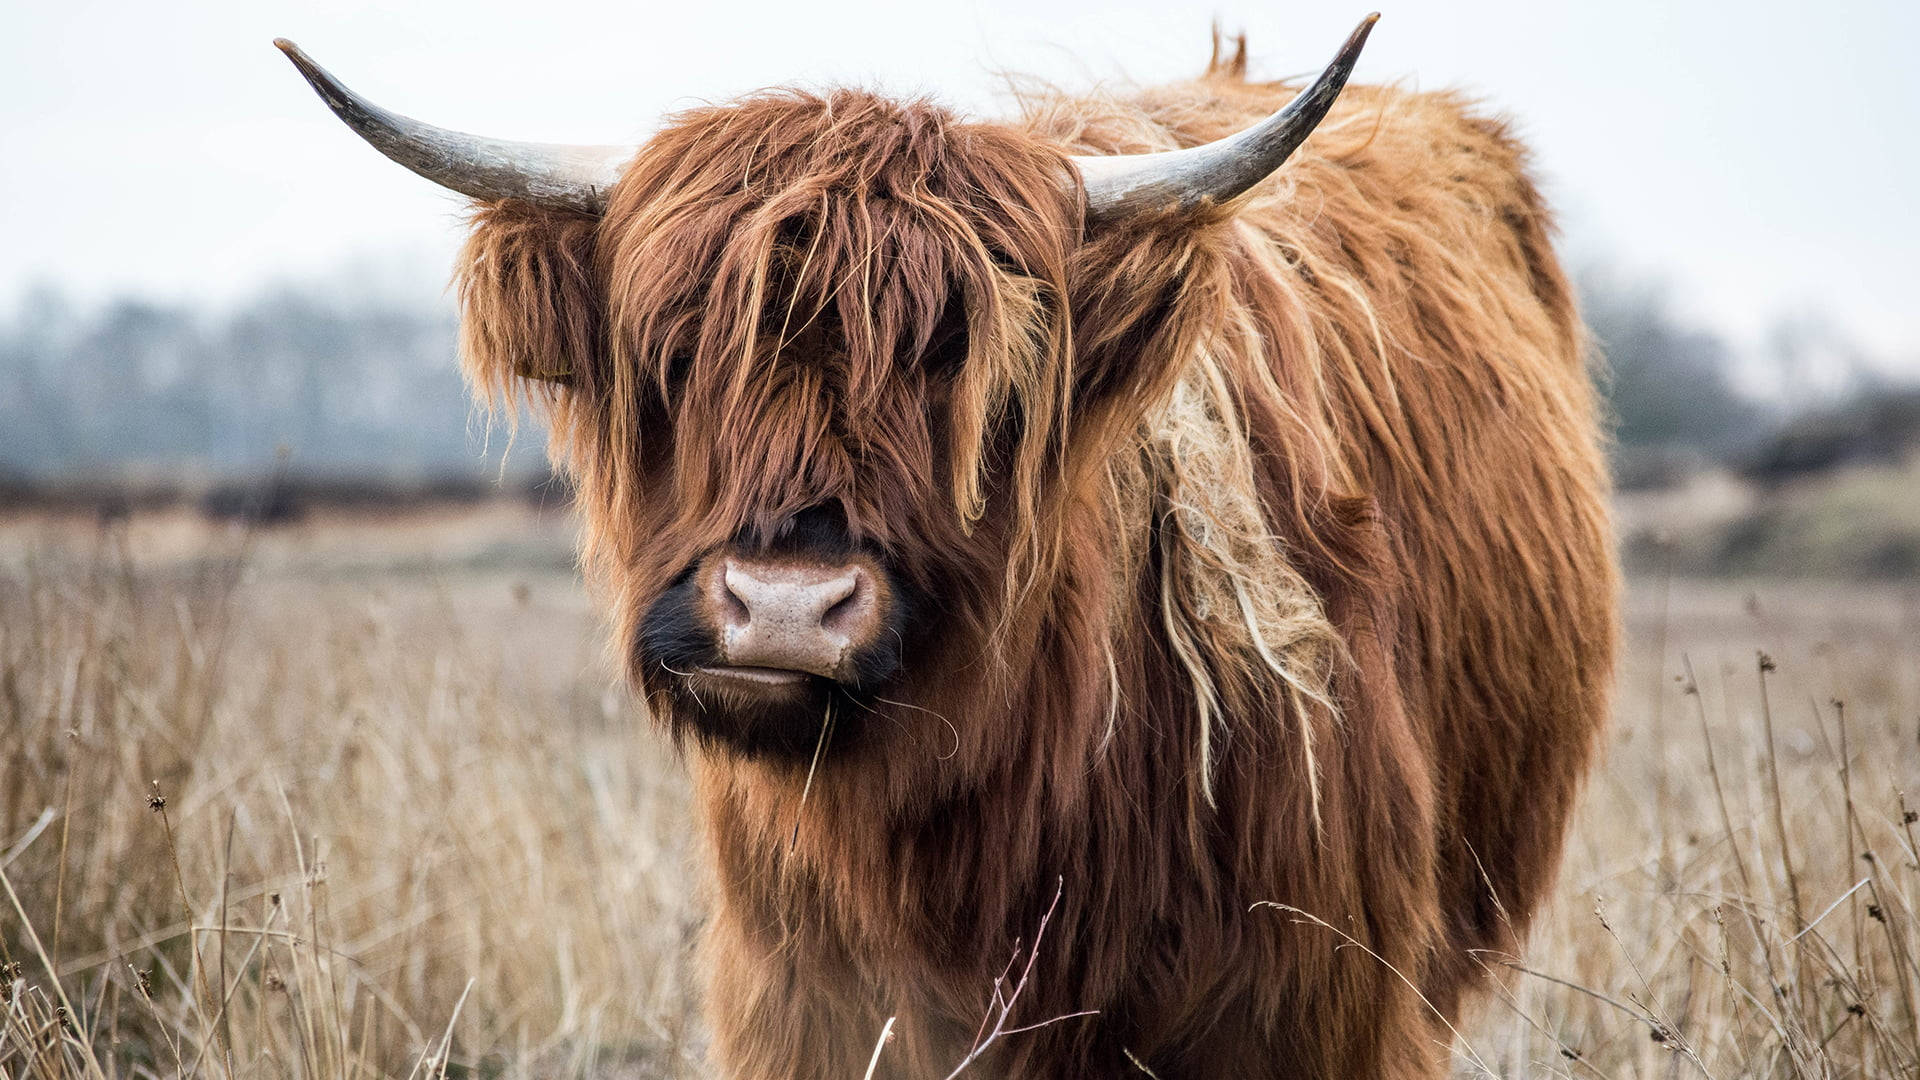 Alone Iconic Cattle Of Scotland Wallpaper